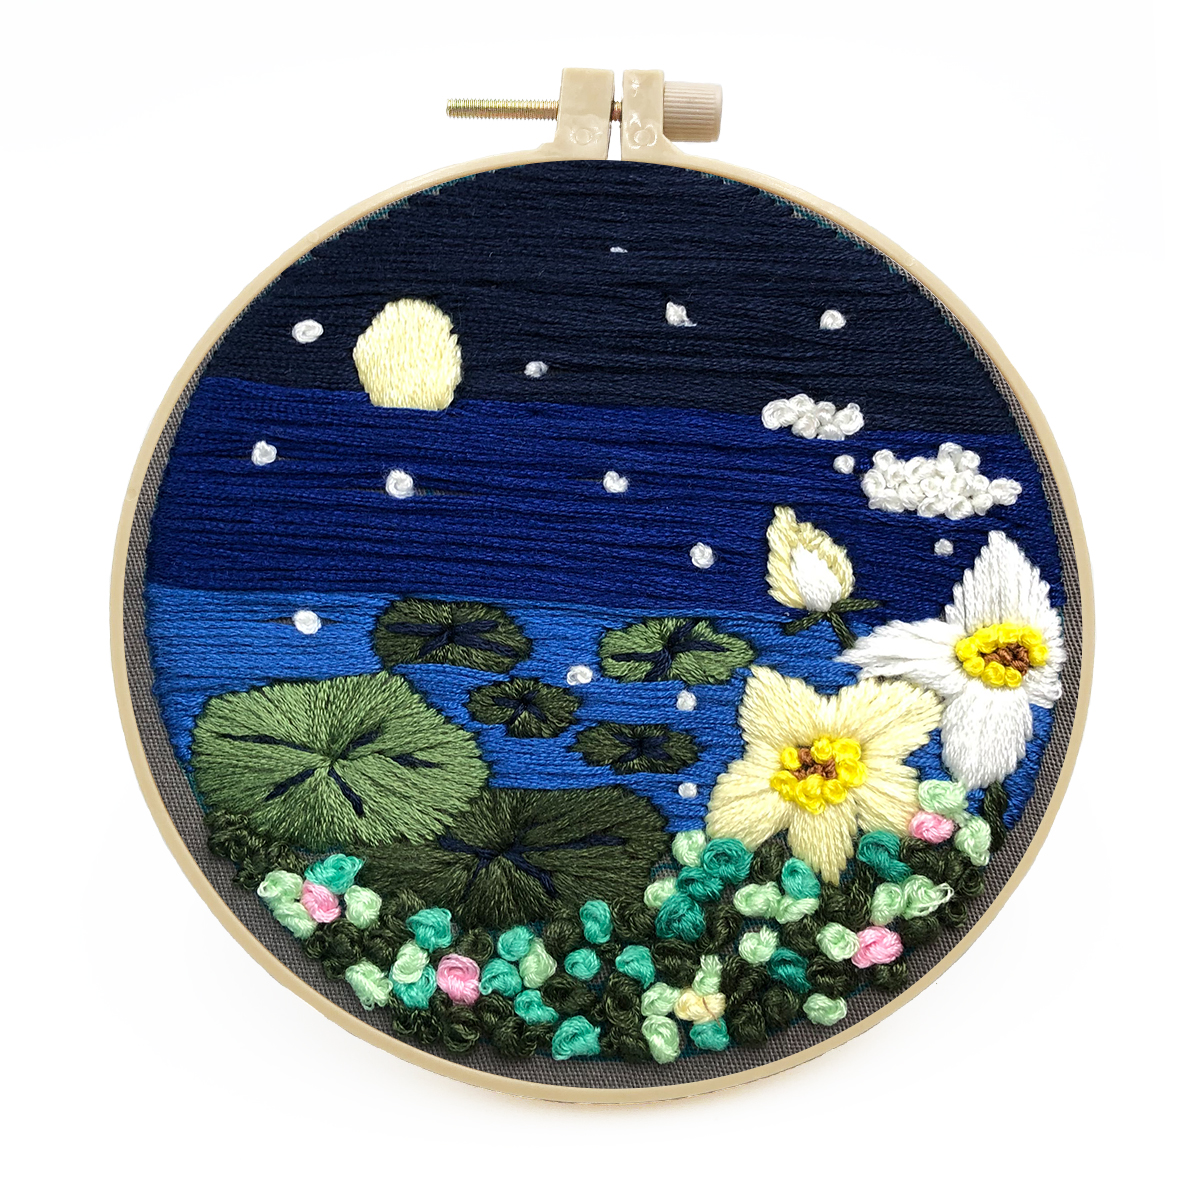 Embroidery Starter Kit Cross stitch kit for Adult Beginner - Lotus pattern